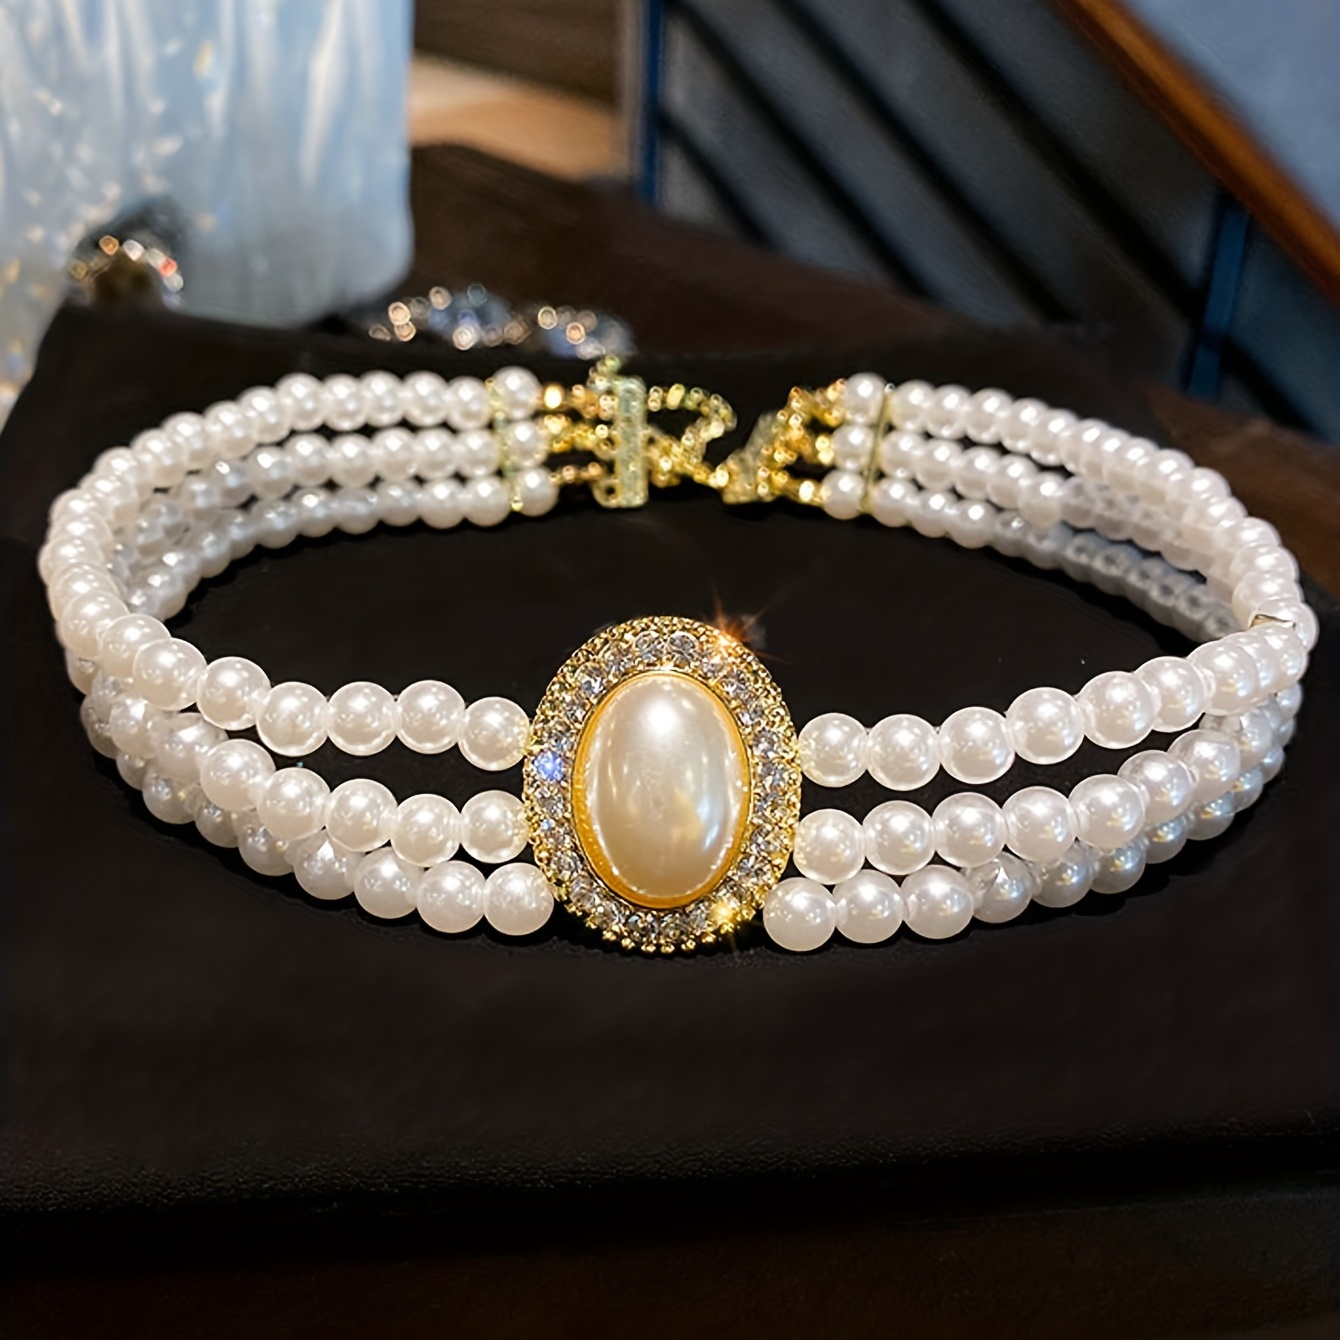 1pc elegant vintage choker necklace inlaid shiny rhinestones elegant neck jewelry decor for men and women